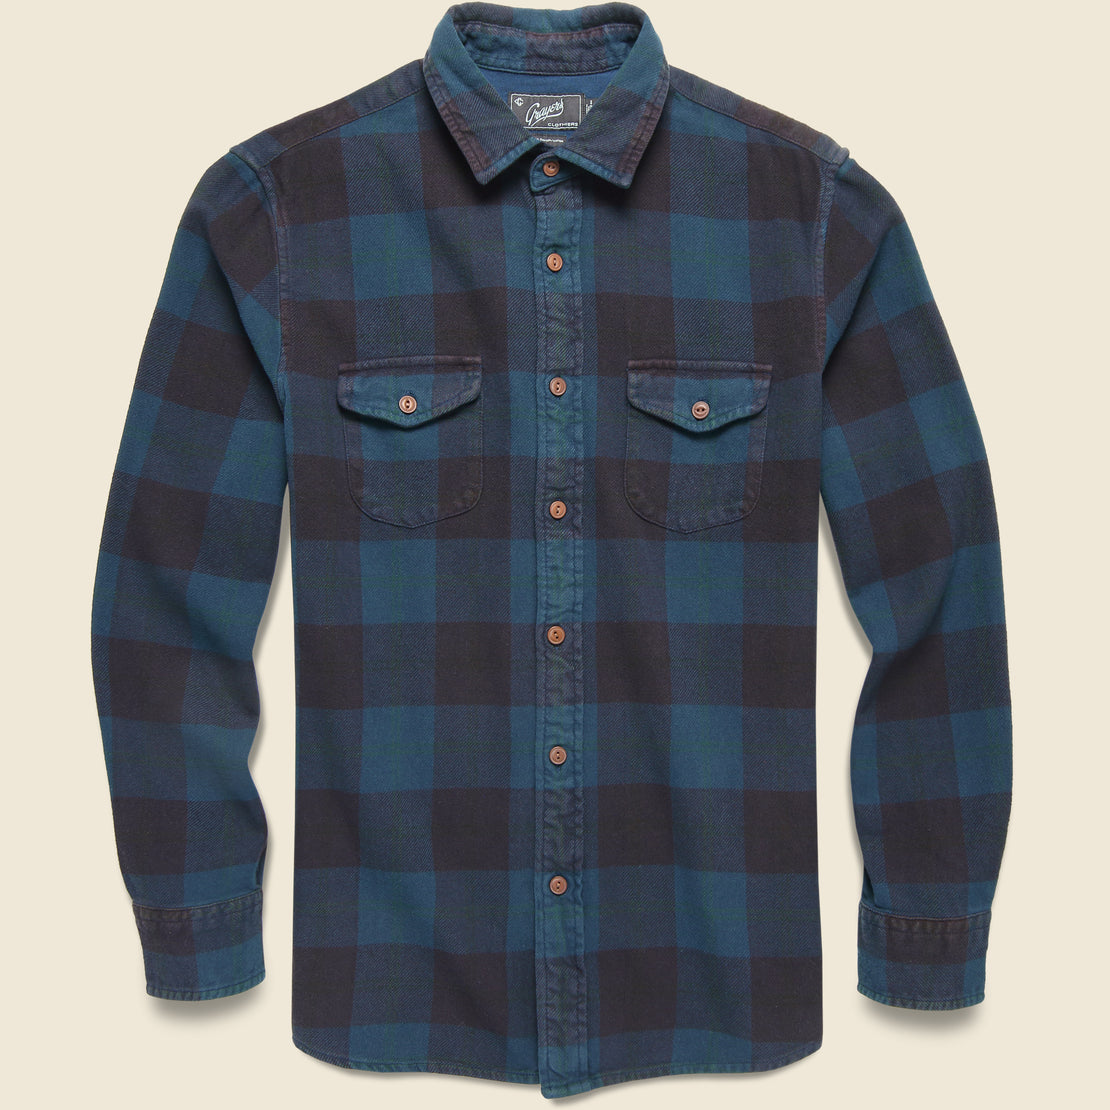 Grayers Boseman Heritage Flannel Shirt - Burgundy Slate